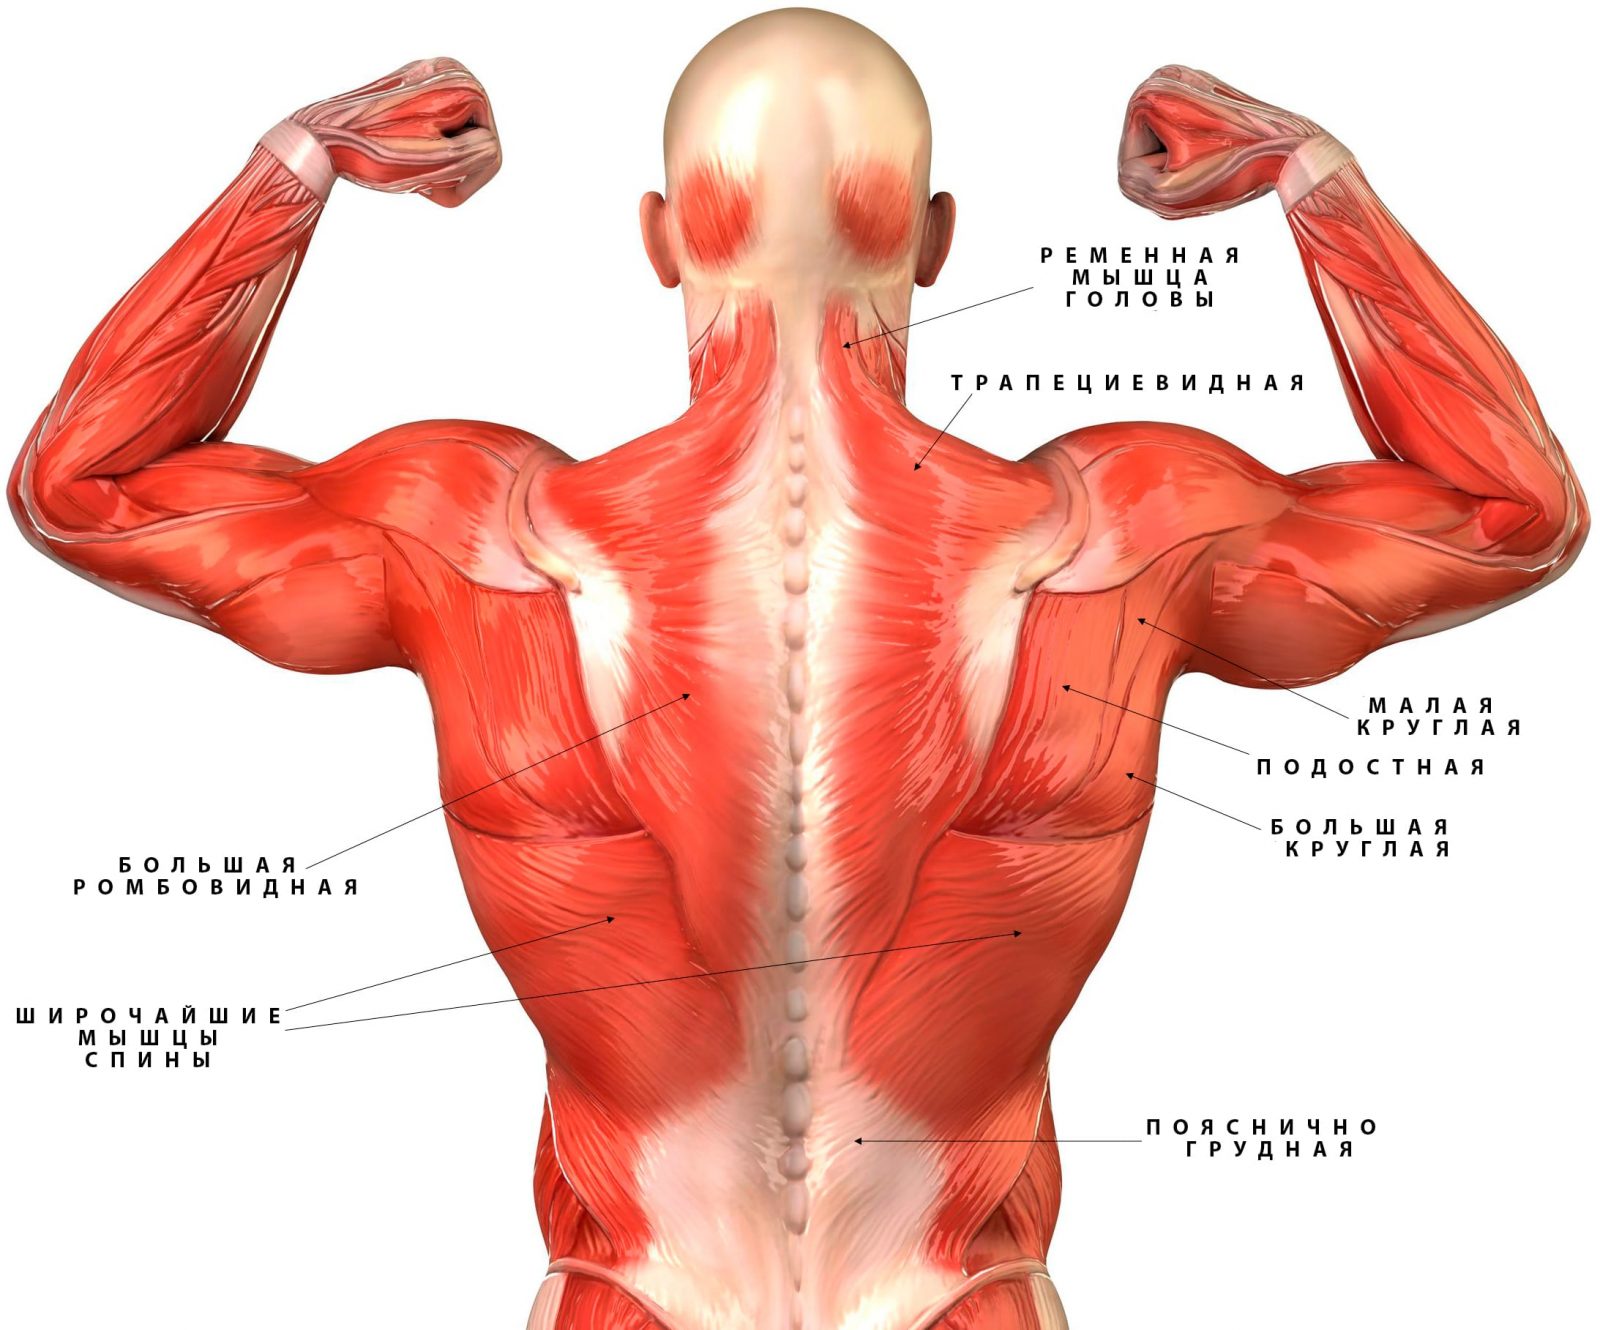 Анатомия скелетных мышц спины человека